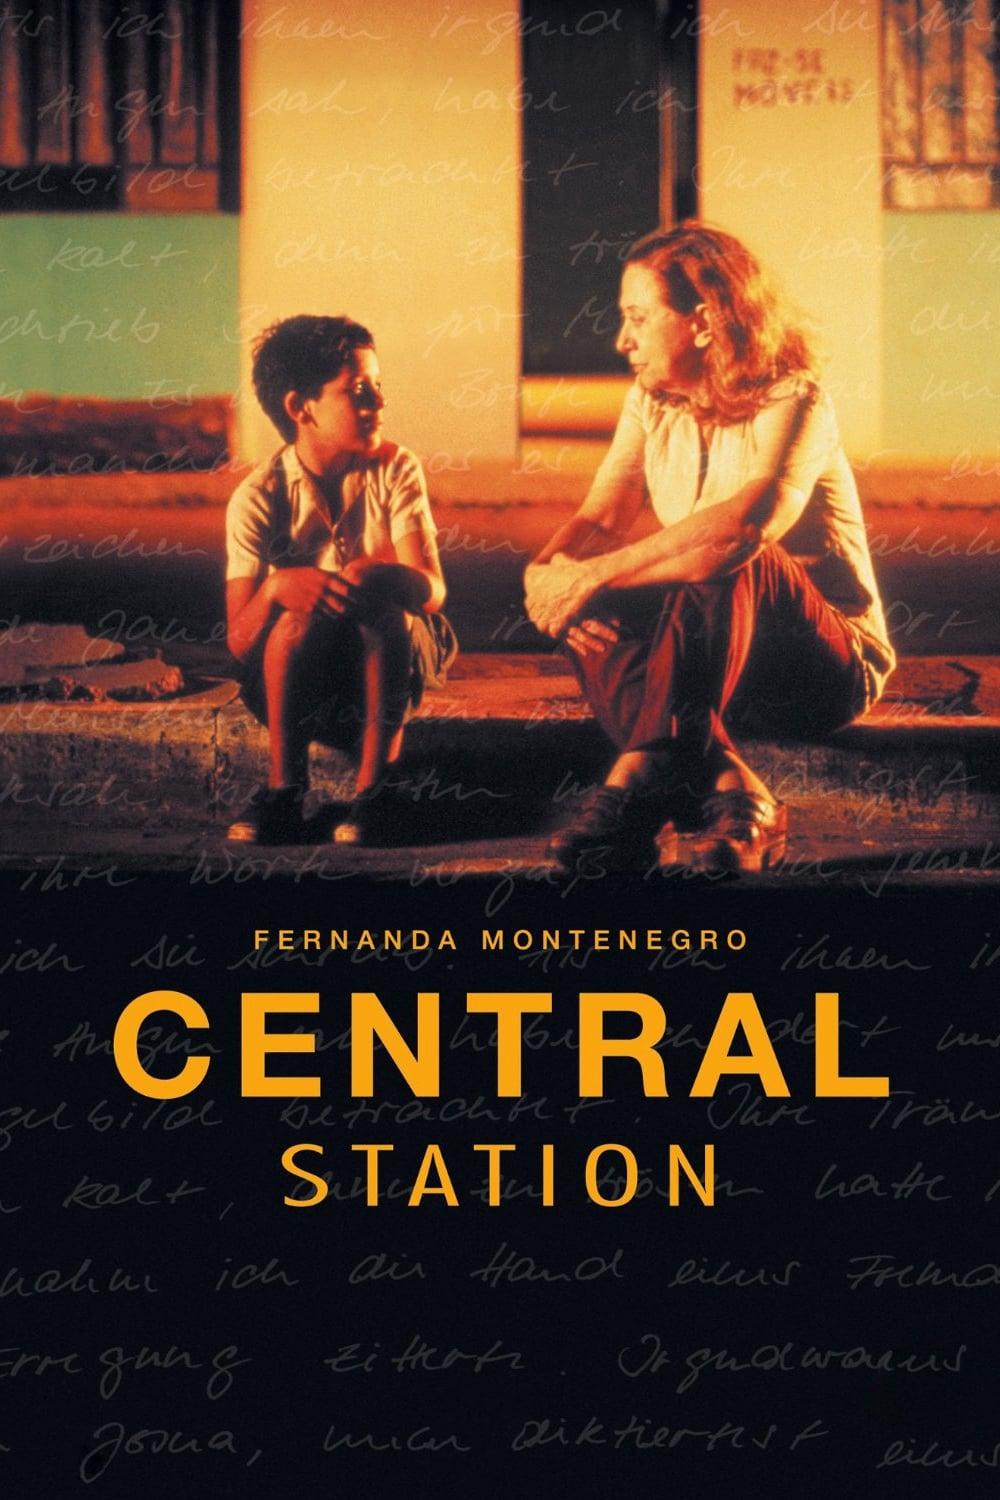 Central Station poster